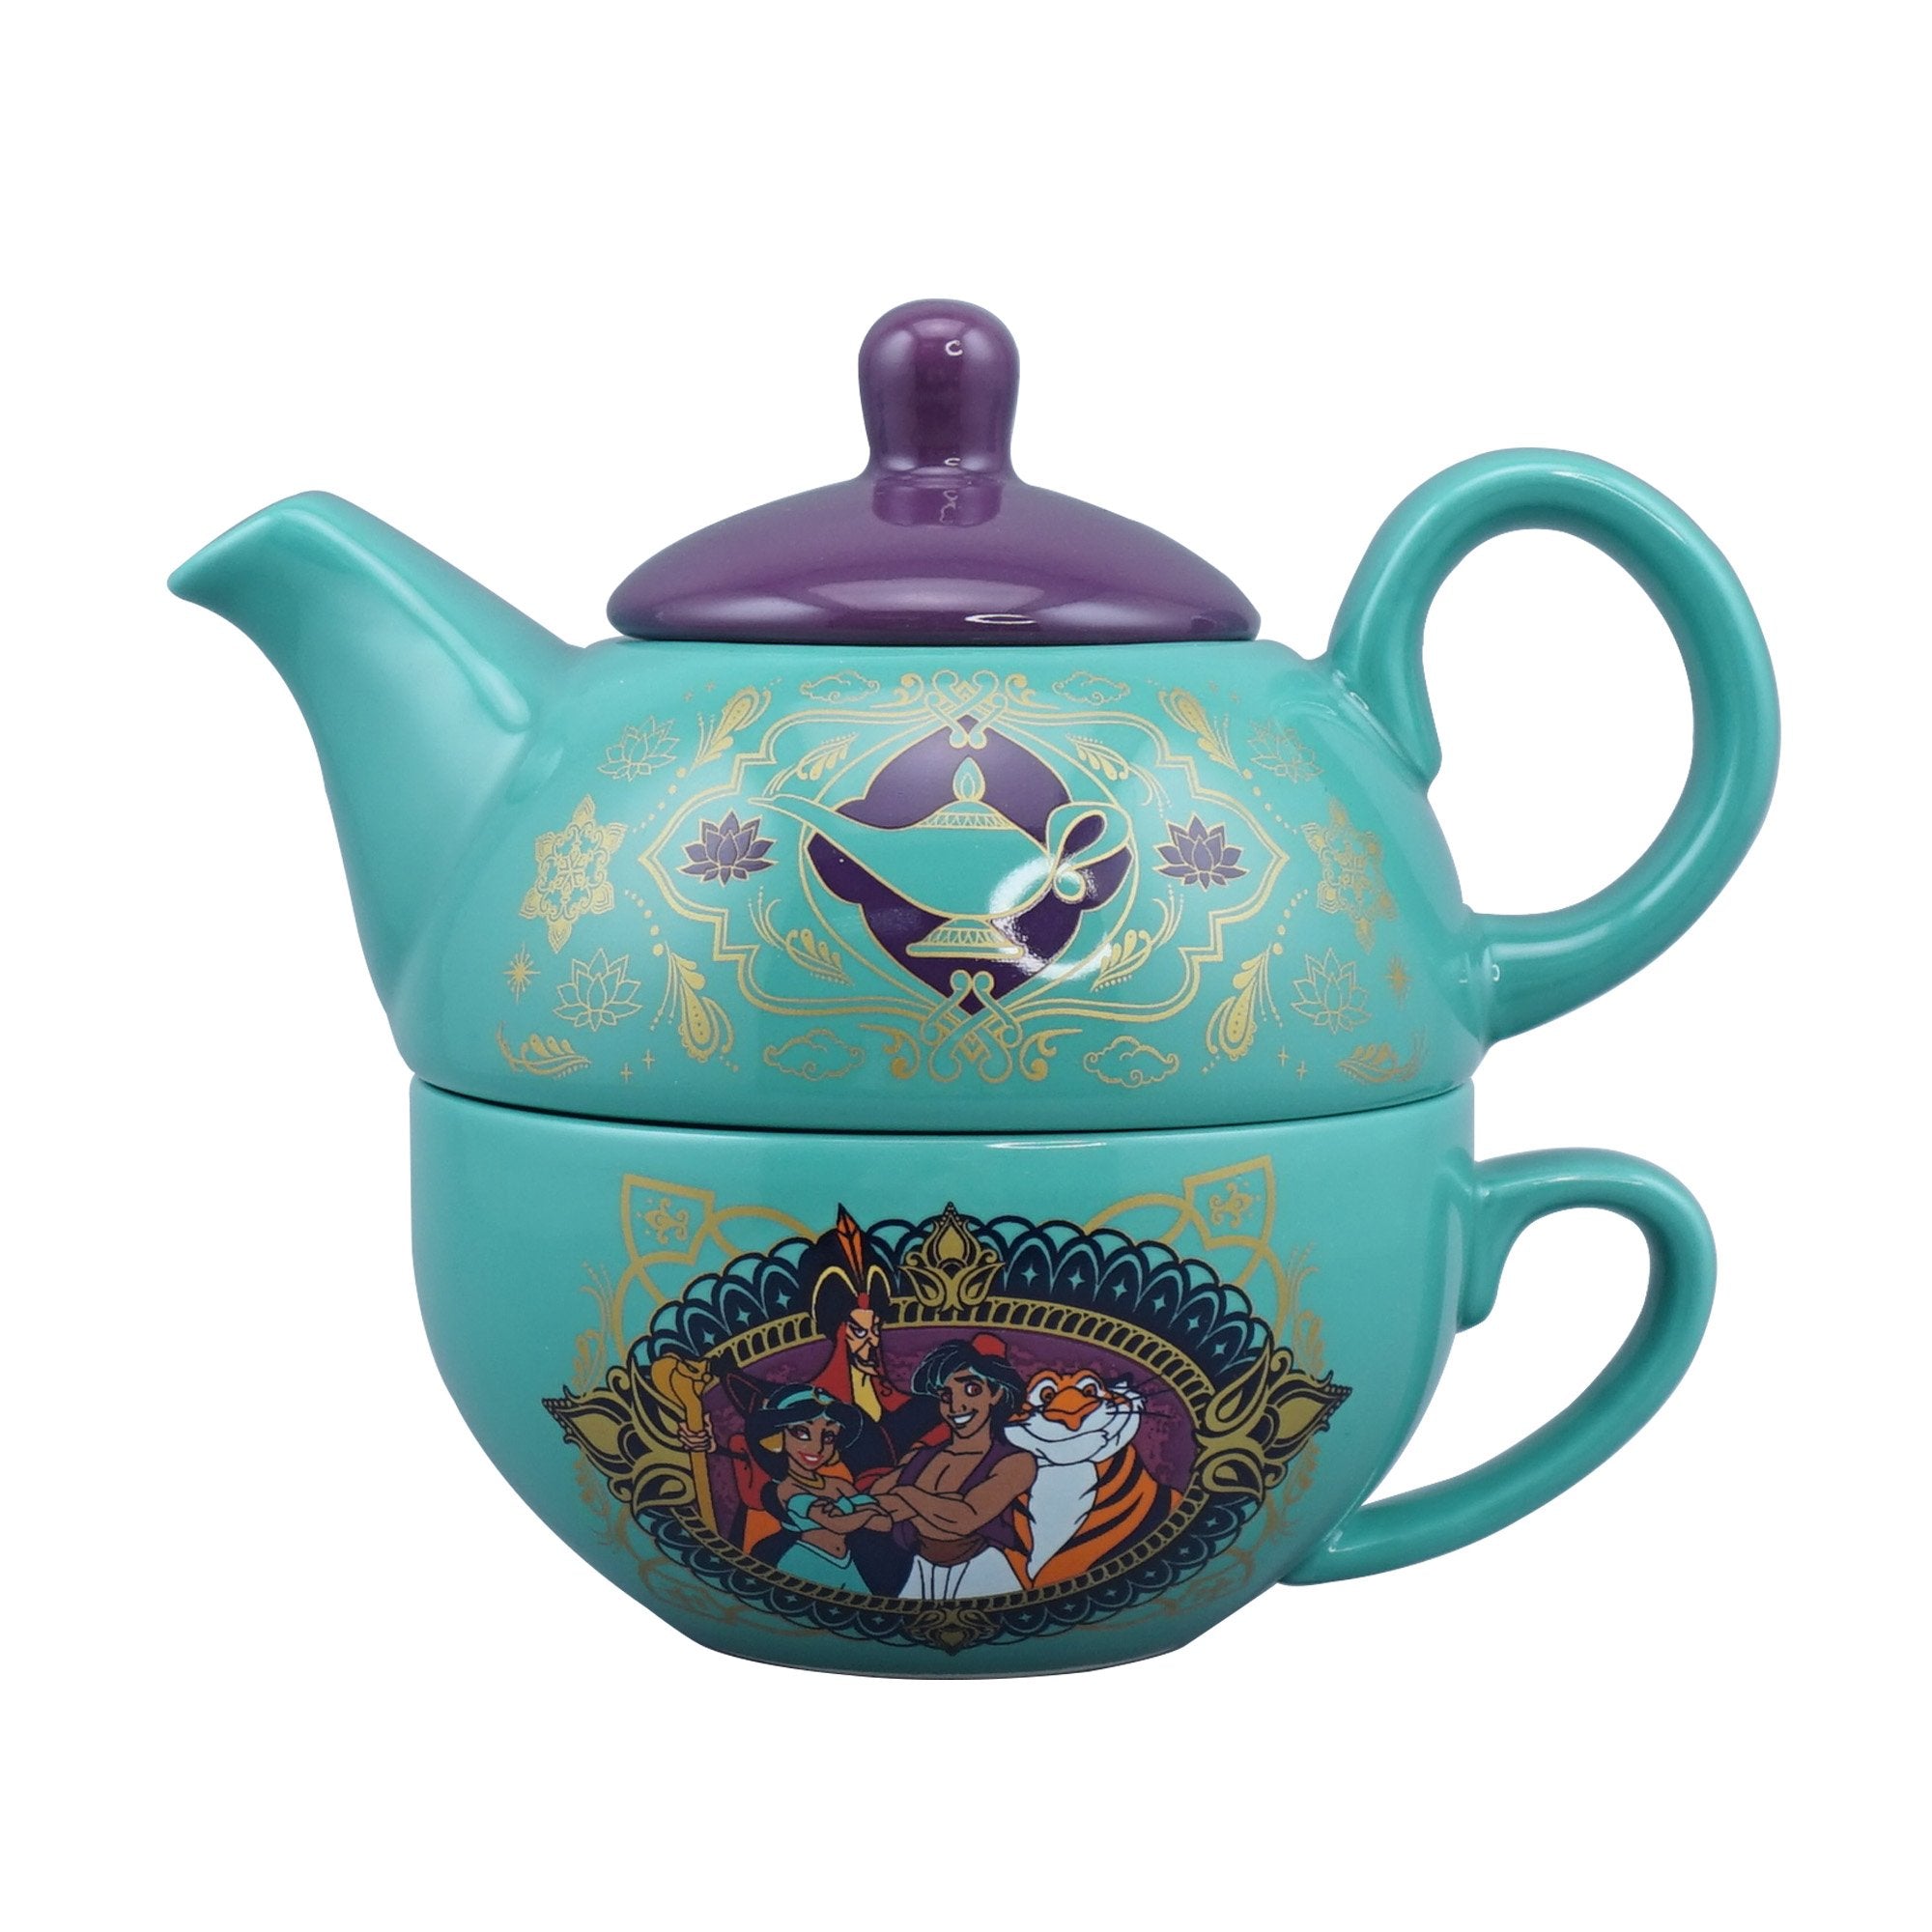 Tea For One Boxed - Disney Aladdin